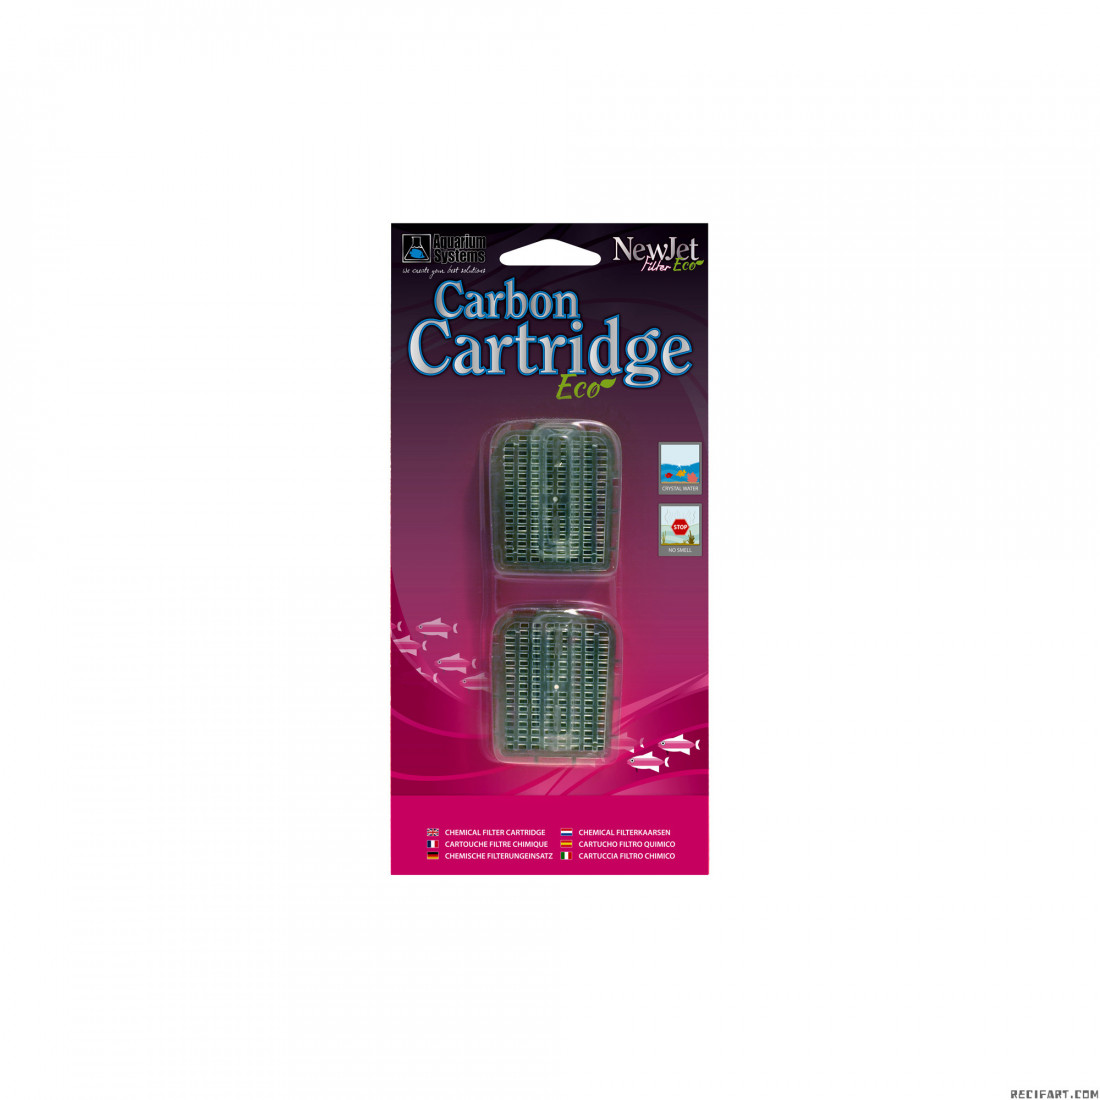 Activated carbon cartridge - NewJet Filter Eco